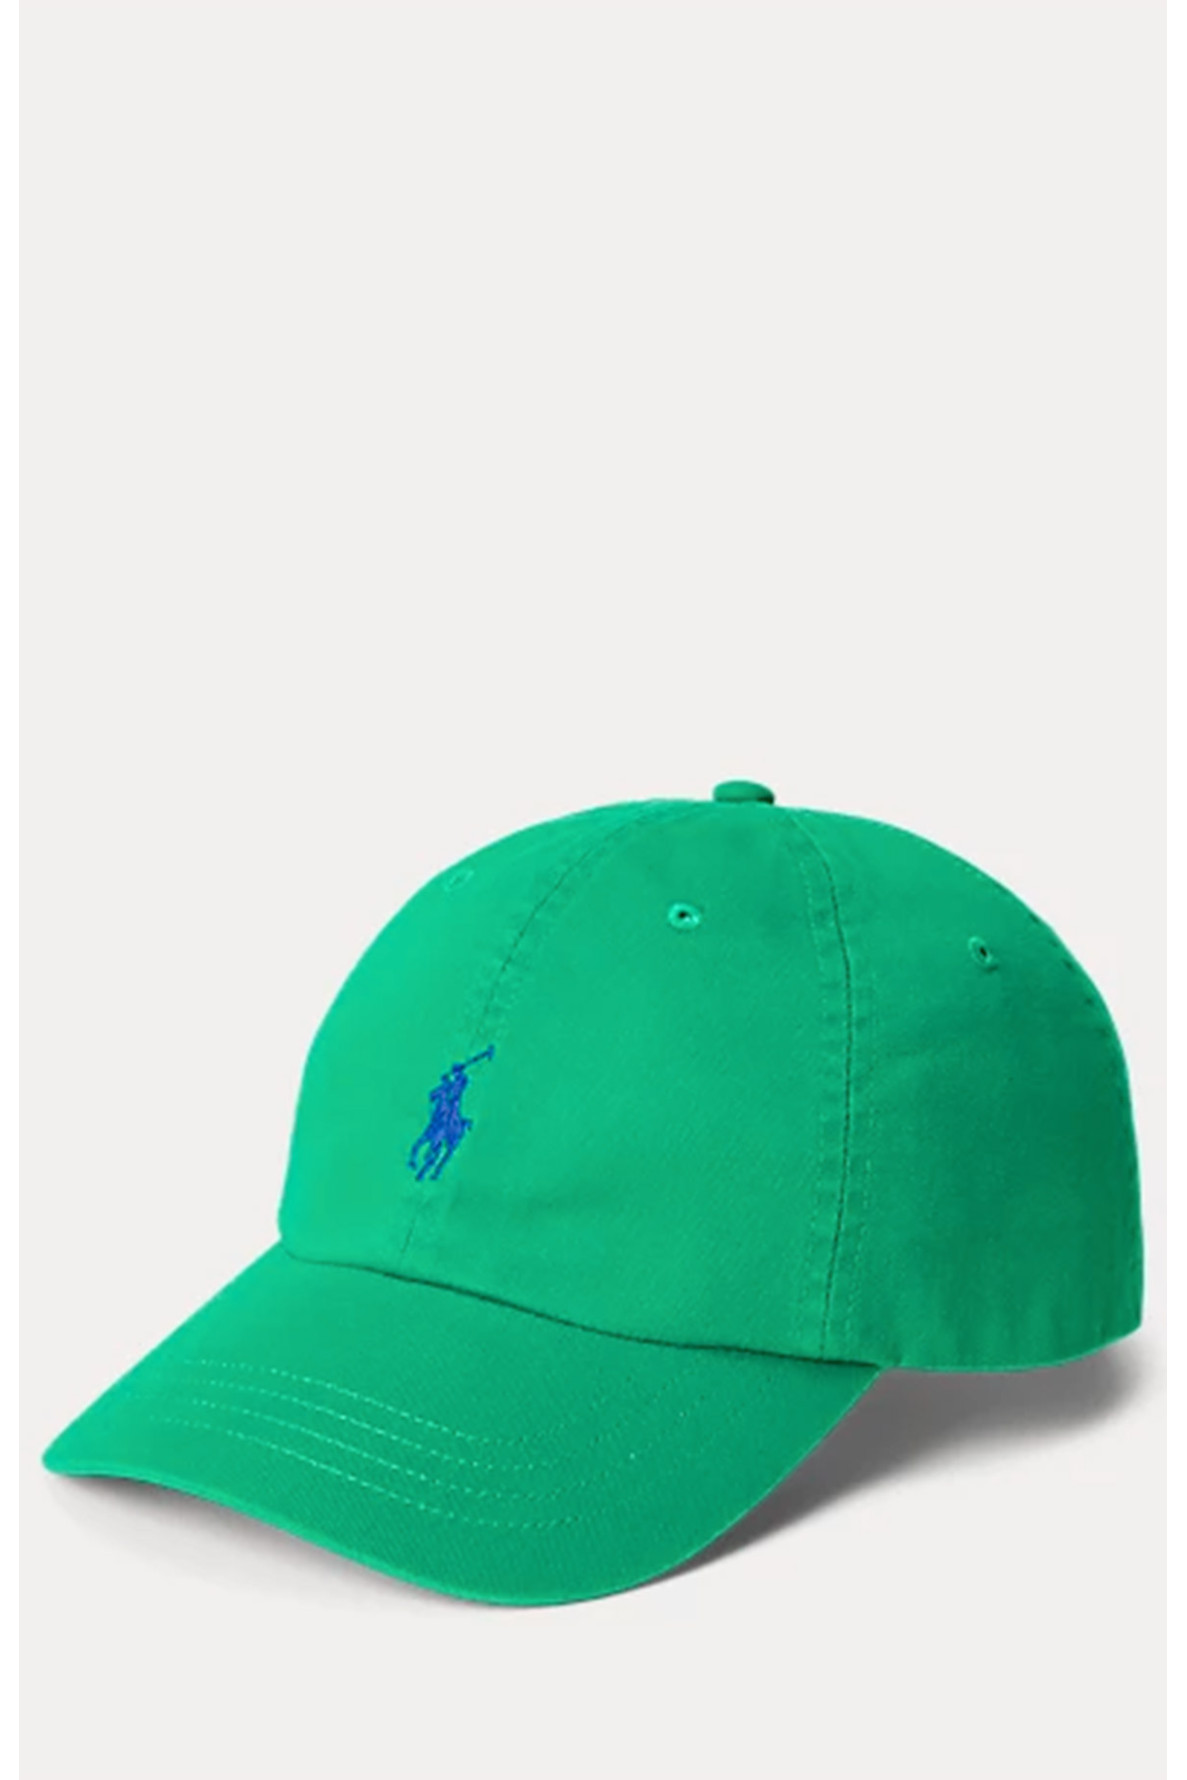 BILLARD GREEN CAP - 1